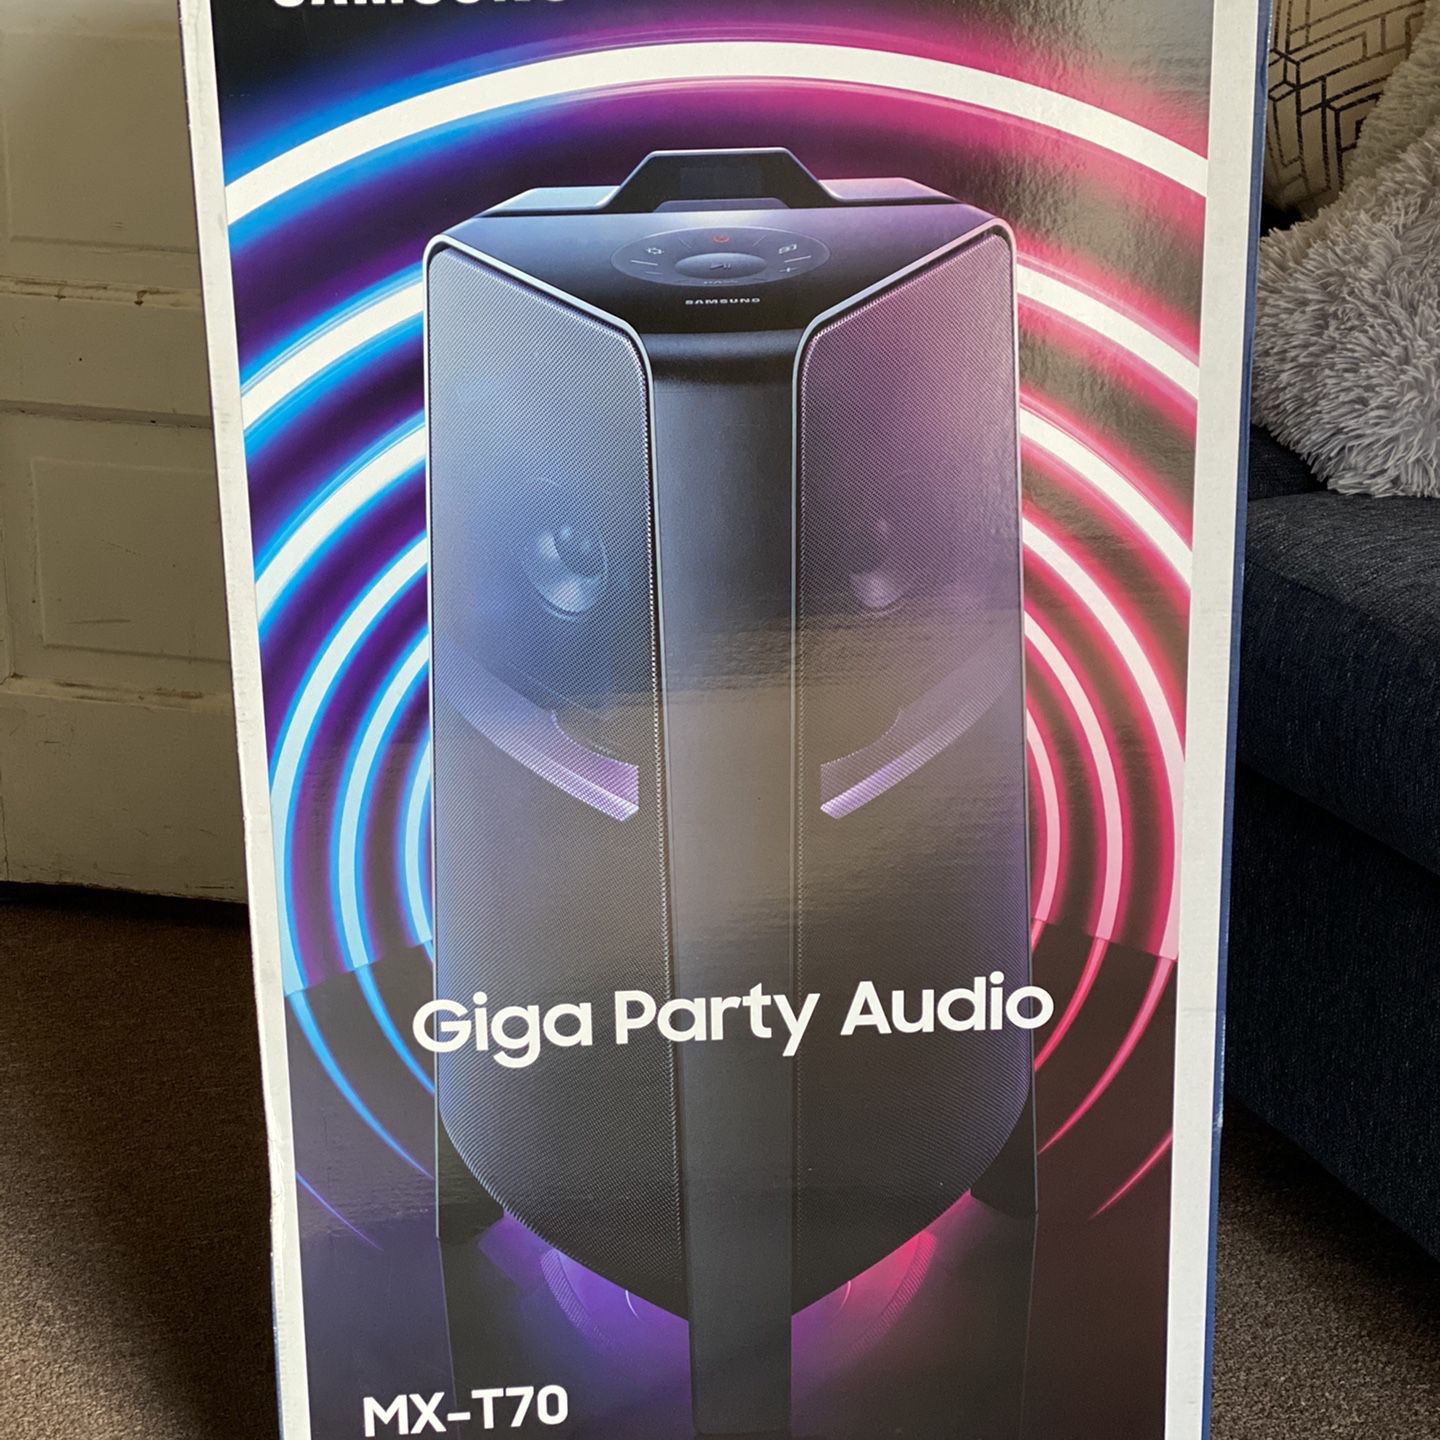 Samsung MX-T70 Giga Party Audio